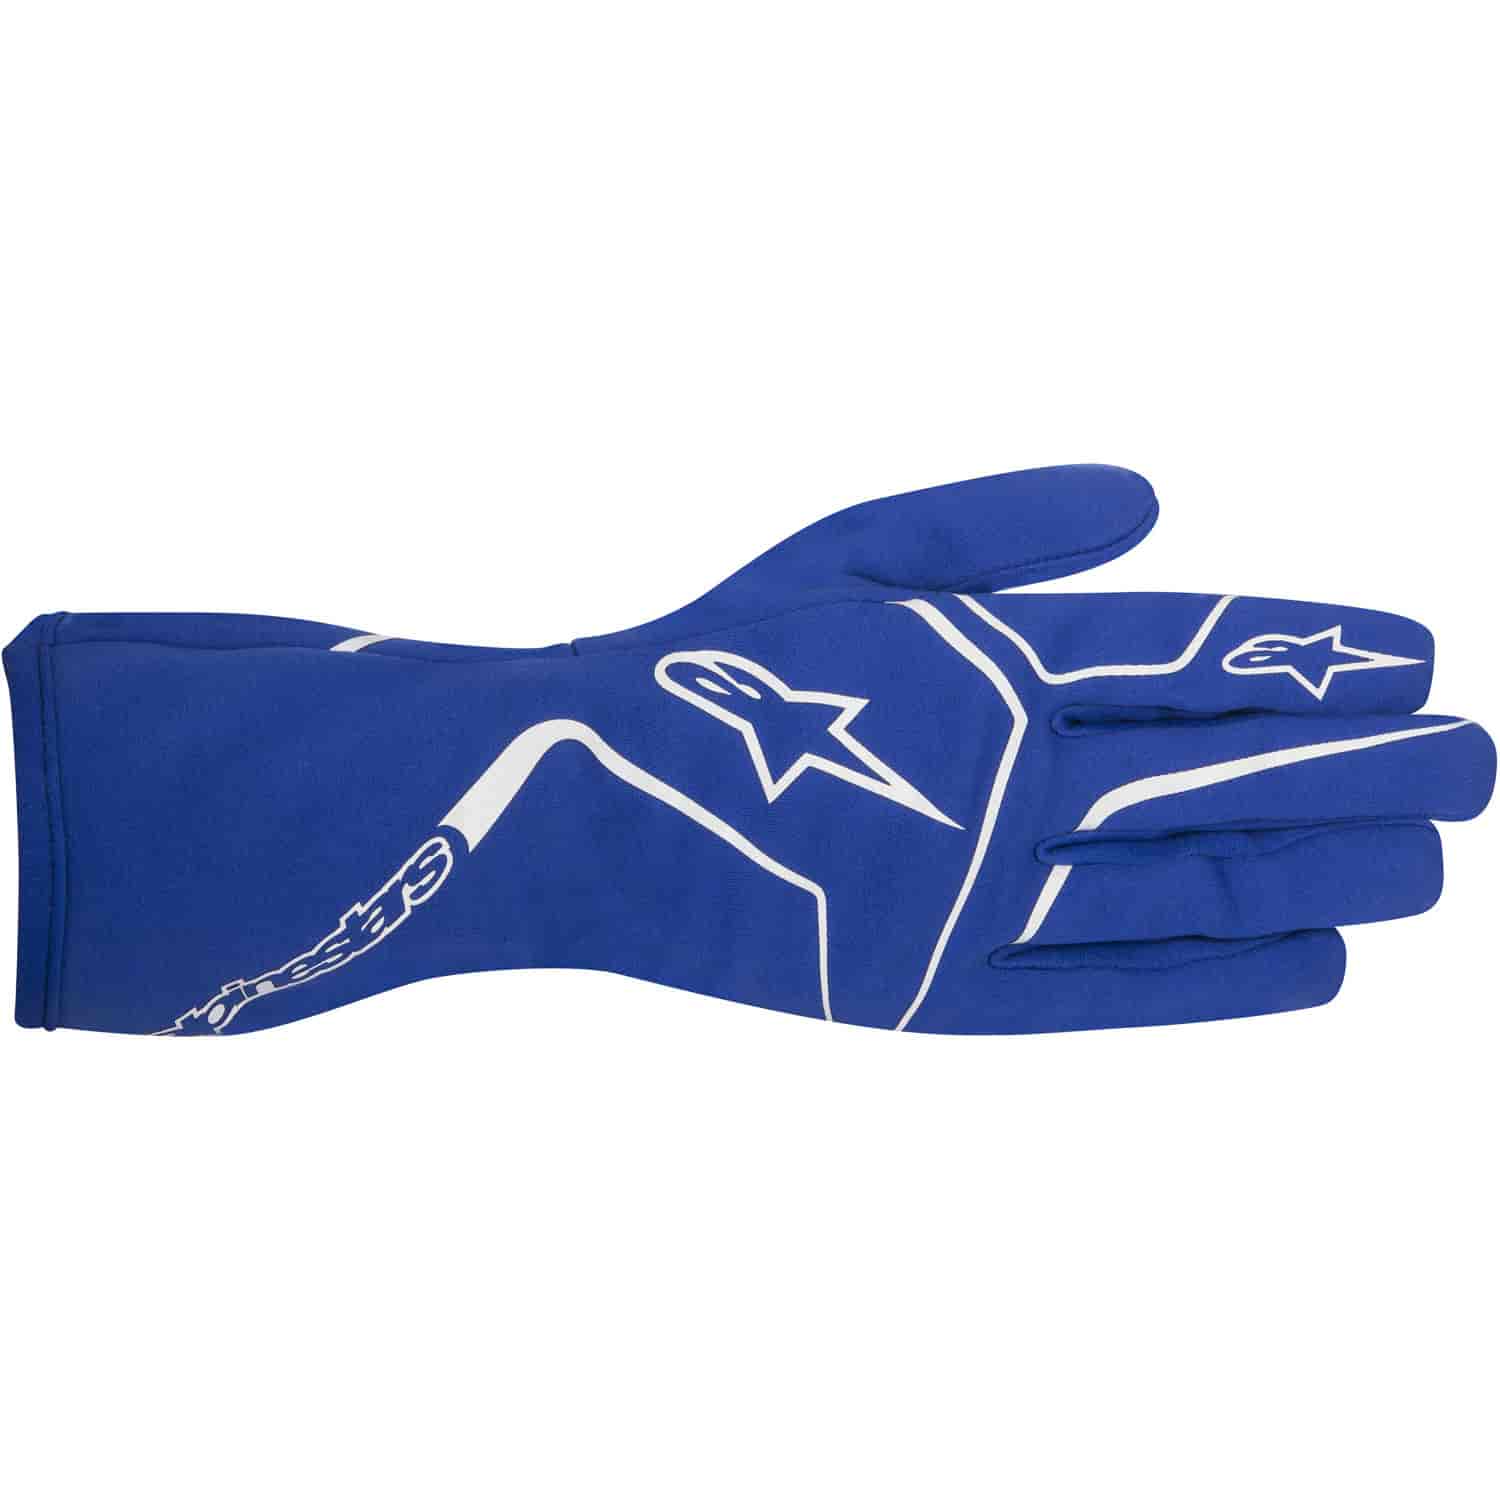 Tech 1-K Race Gloves Blue